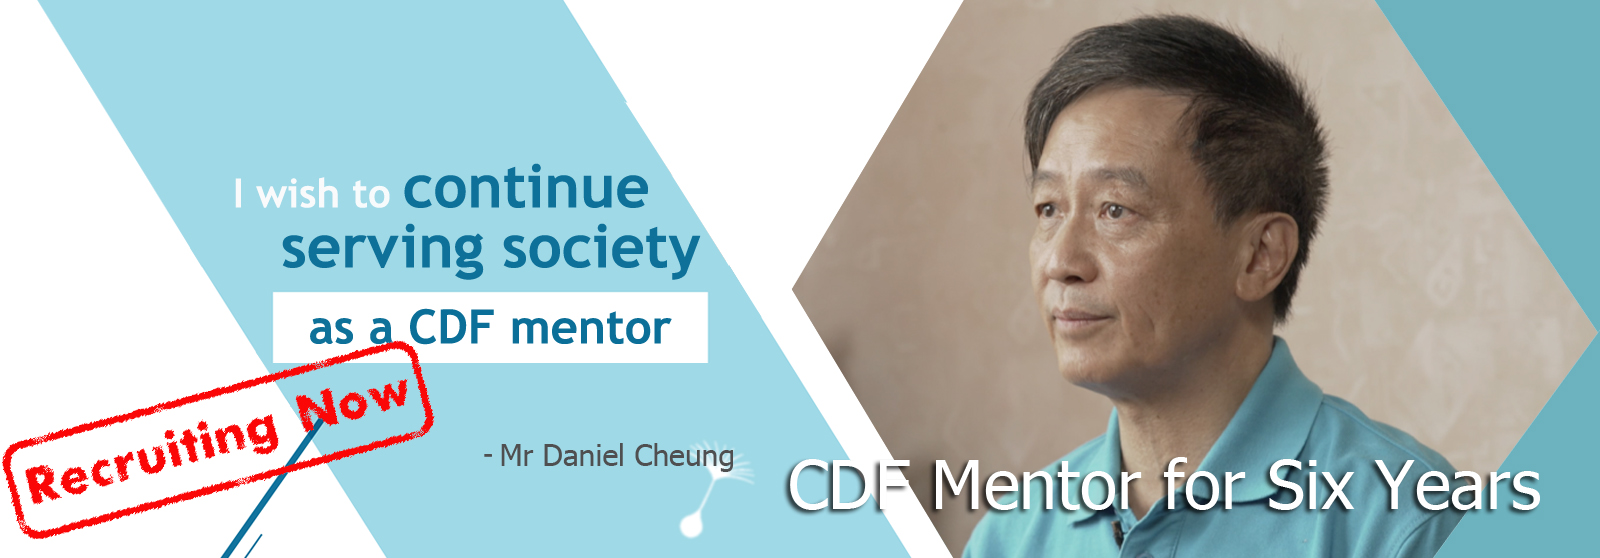 CDF Mentors for Six Years - Mr Daniel Cheung